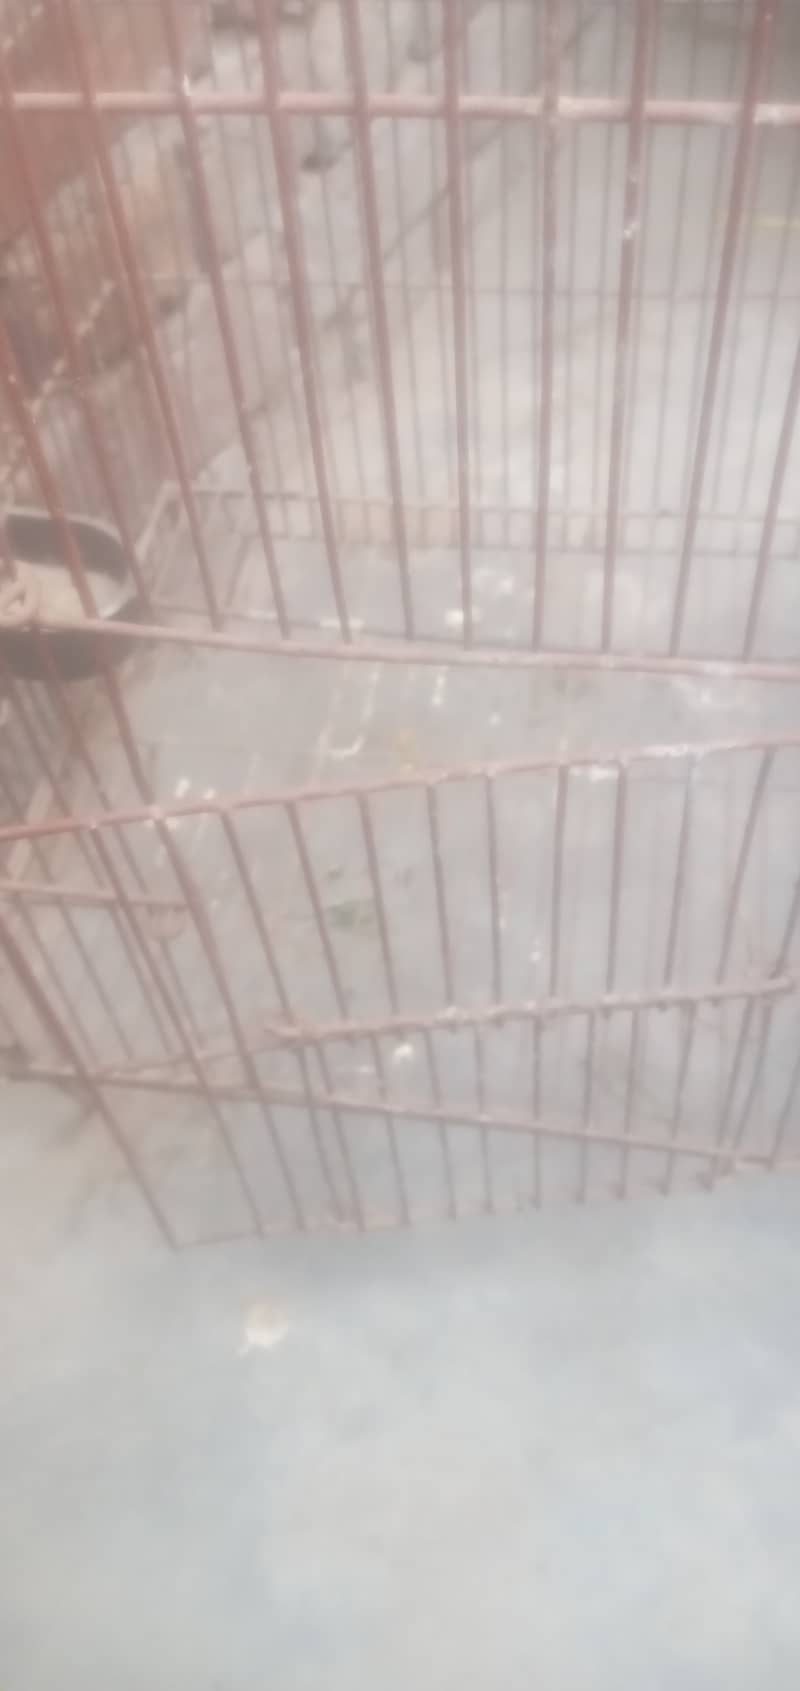 Iran Cage Strorng Net For Birds 12